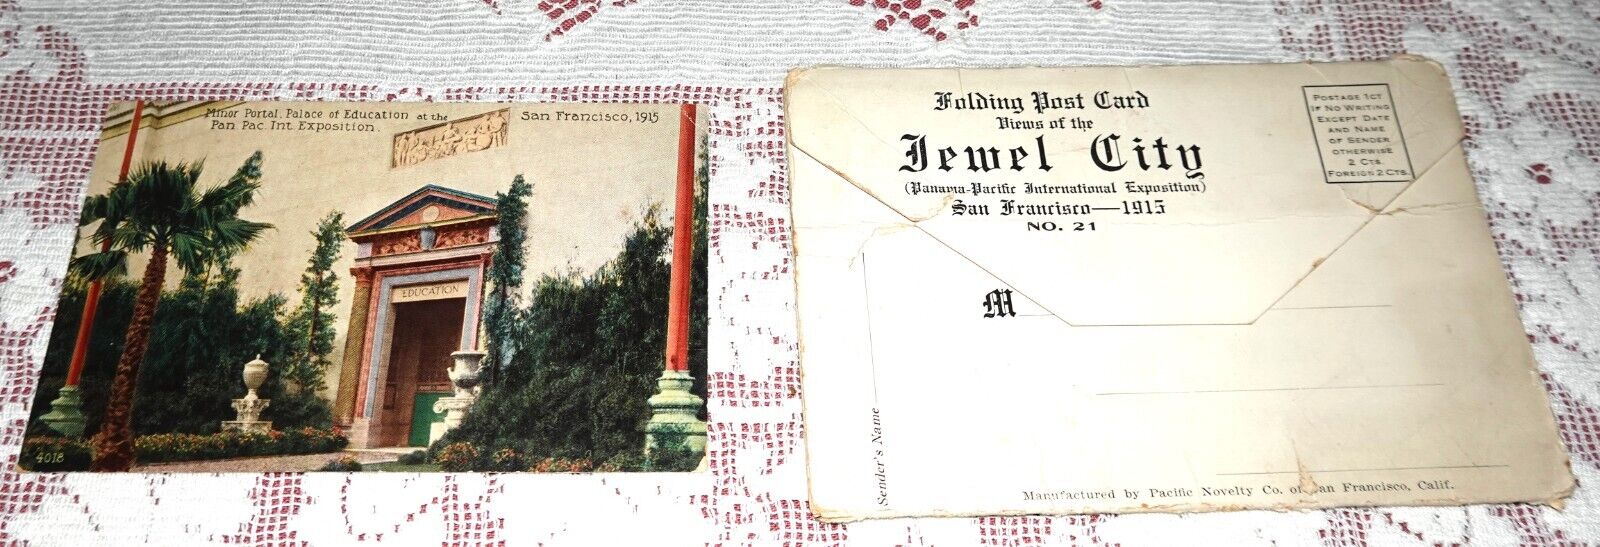 Folding Post Card - 1915 PANAMA-PACIFIC EXPOSITION - San Francisco - Jewel City